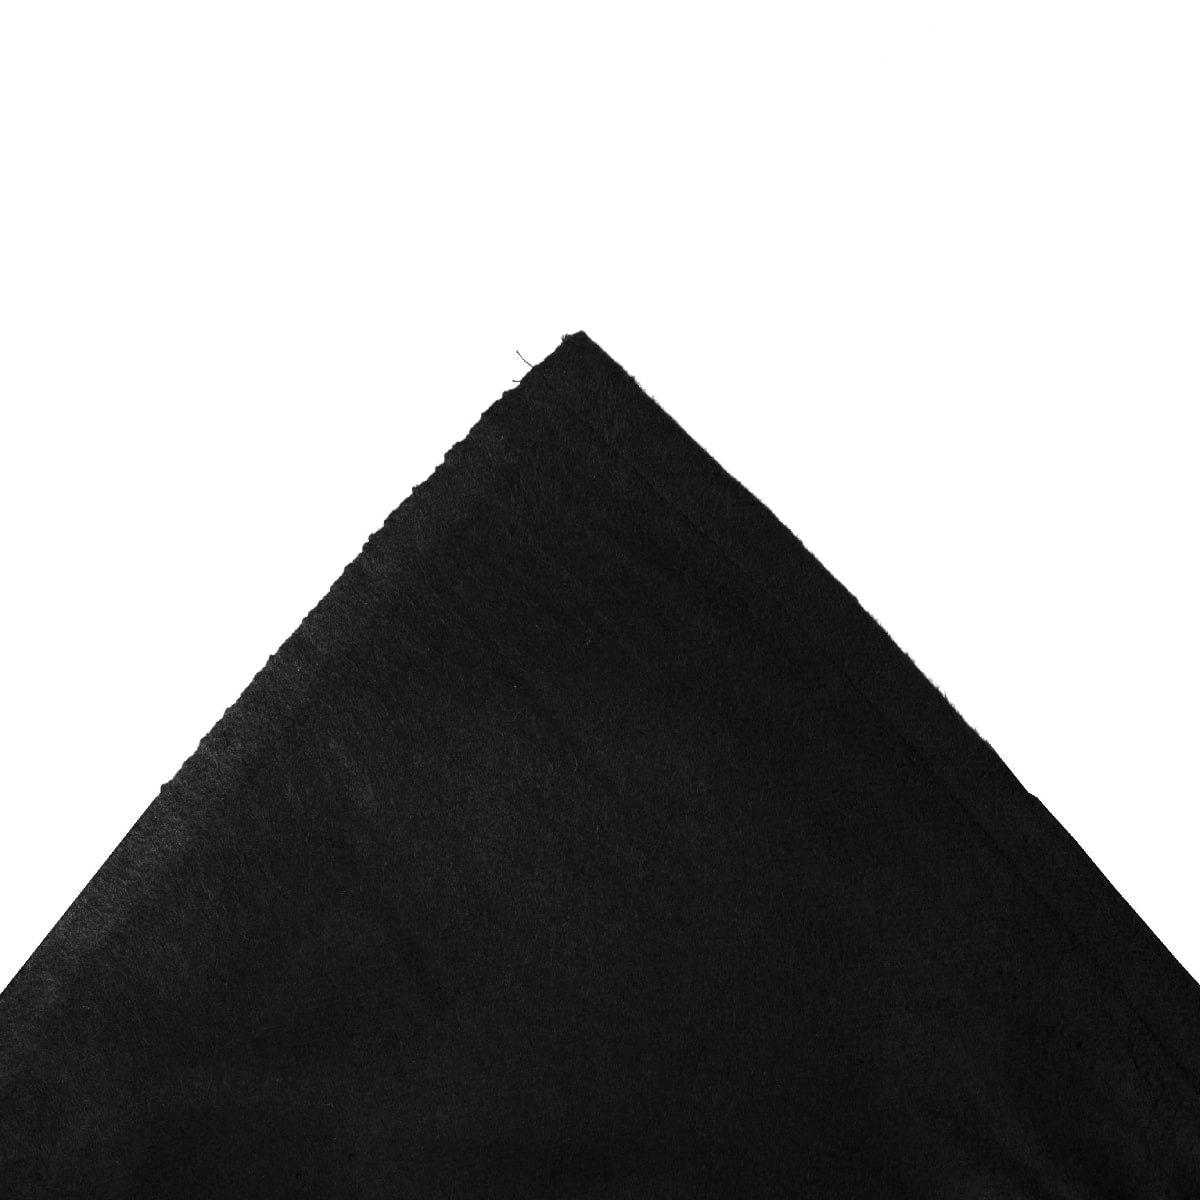  Black Material/Molton 600 x 600 cm / 20 x 20'